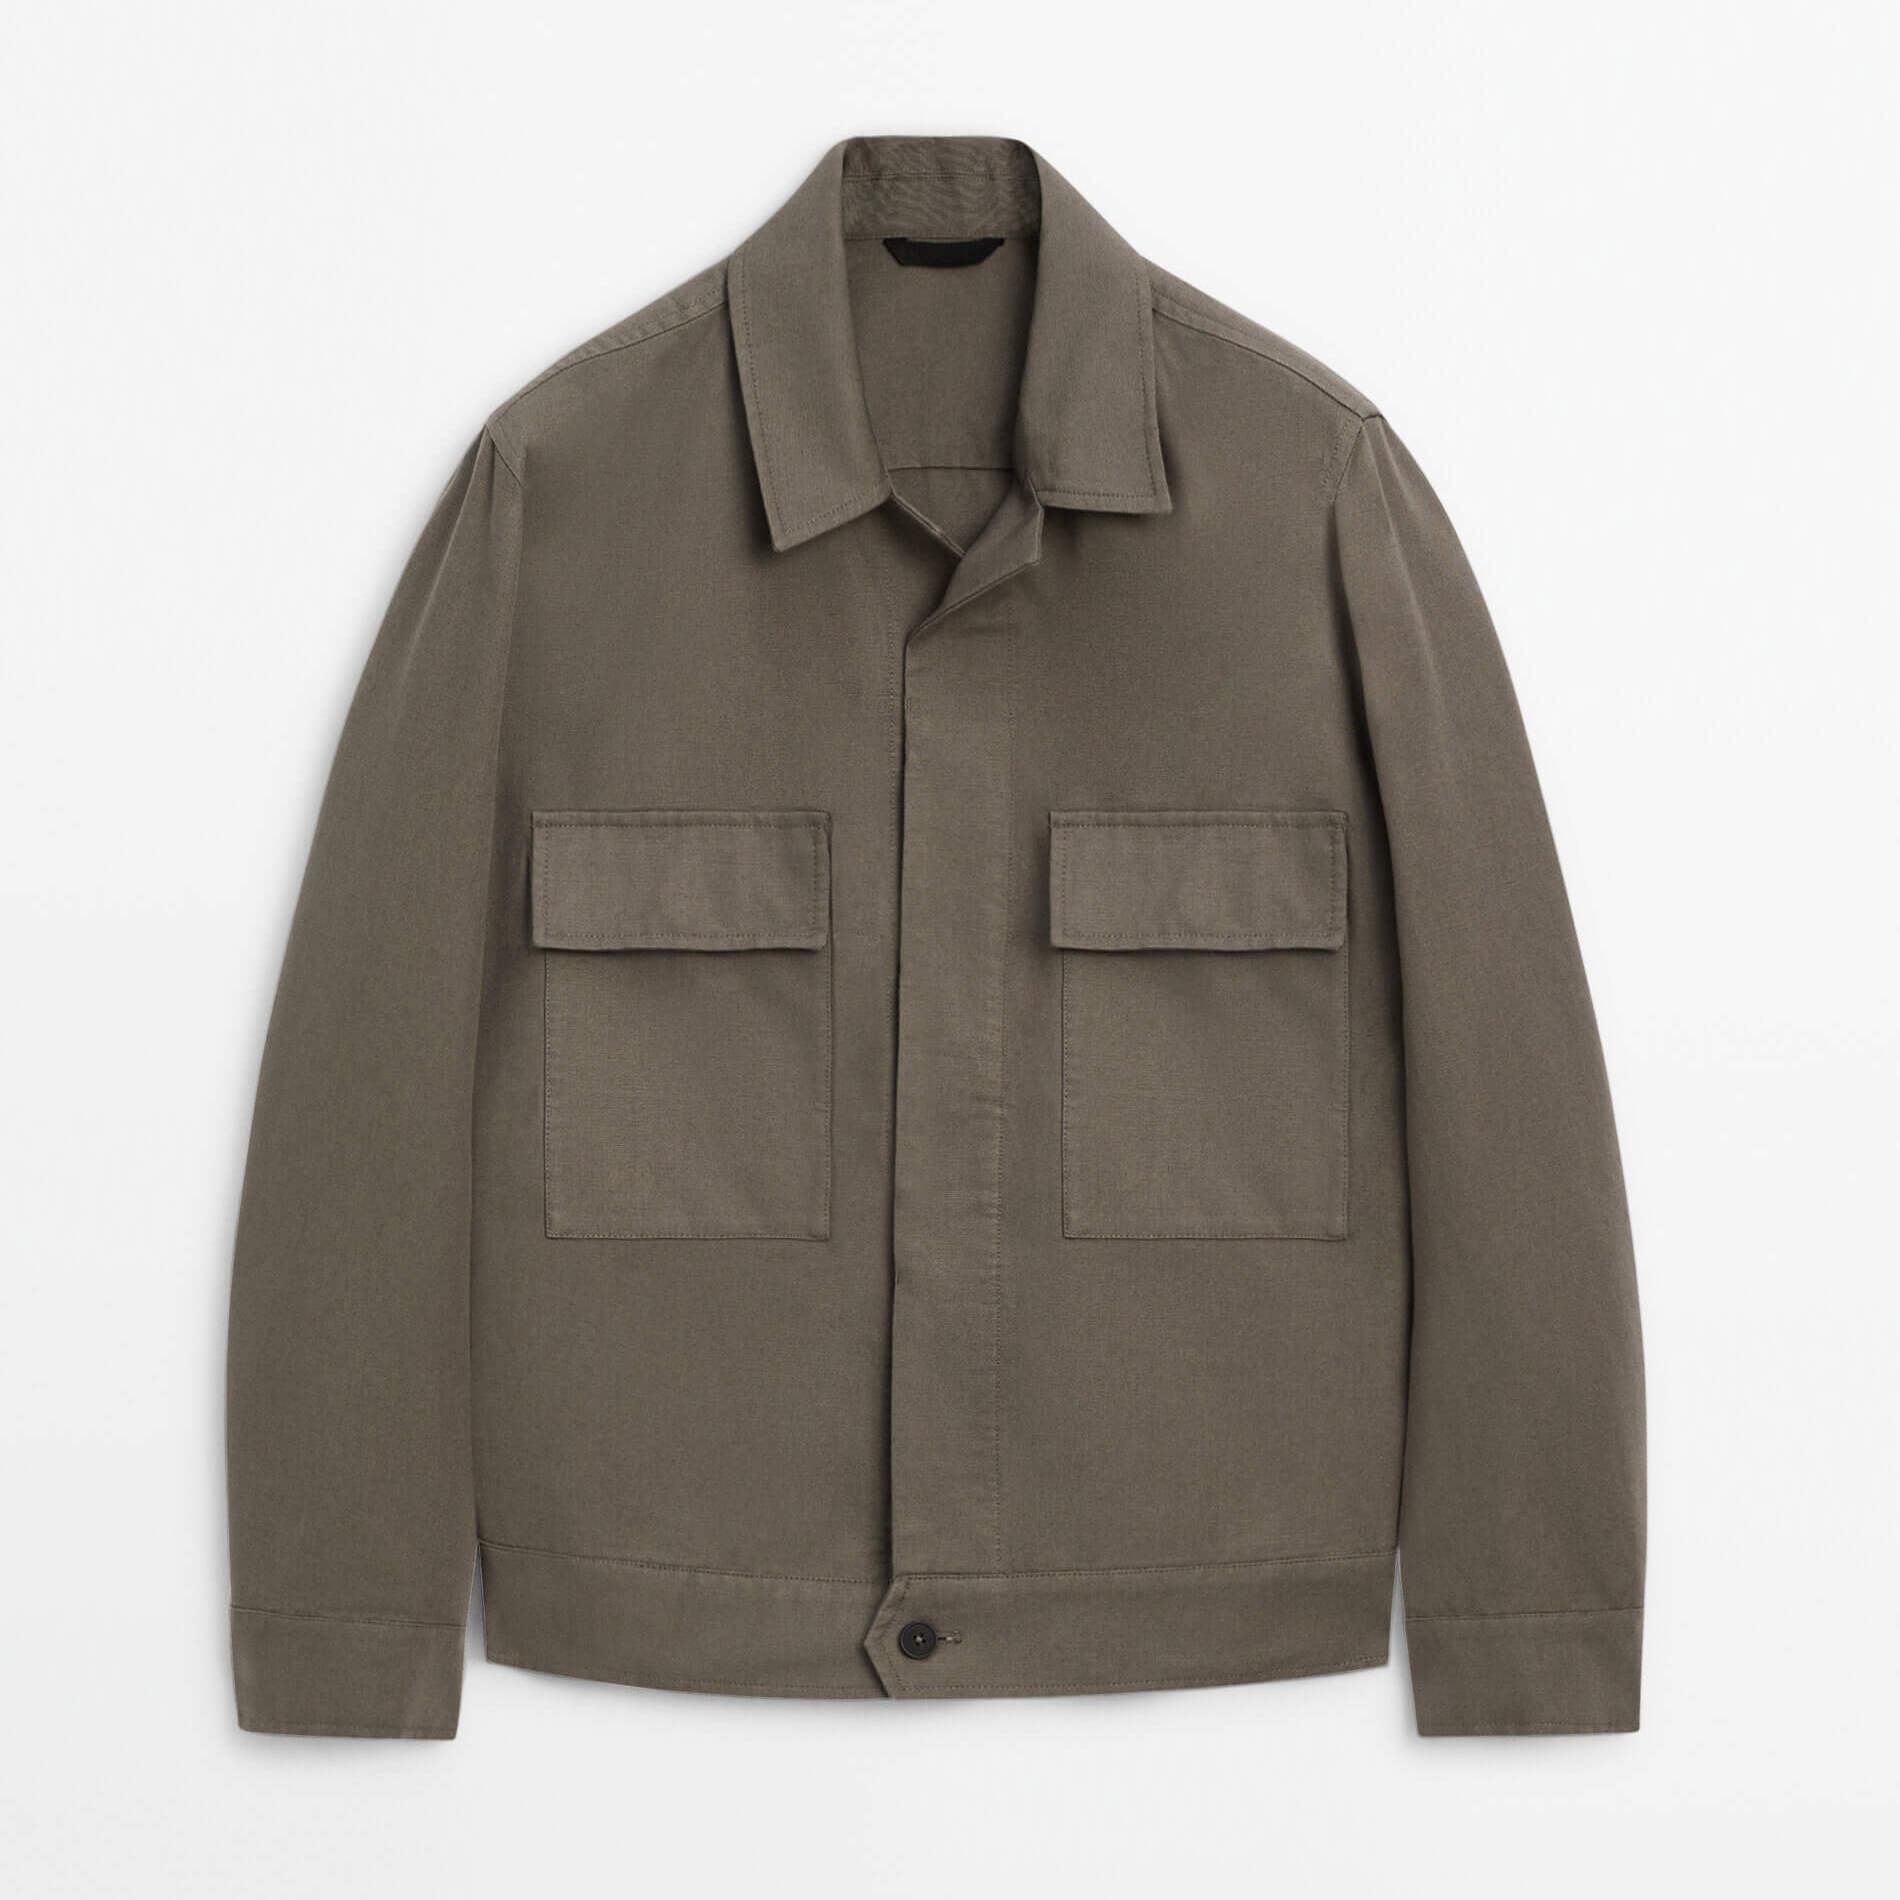 Куртка Massimo Dutti Cotton With Chest Pockets Studio, зеленый куртка massimo dutti jacket with pockets серо голубой